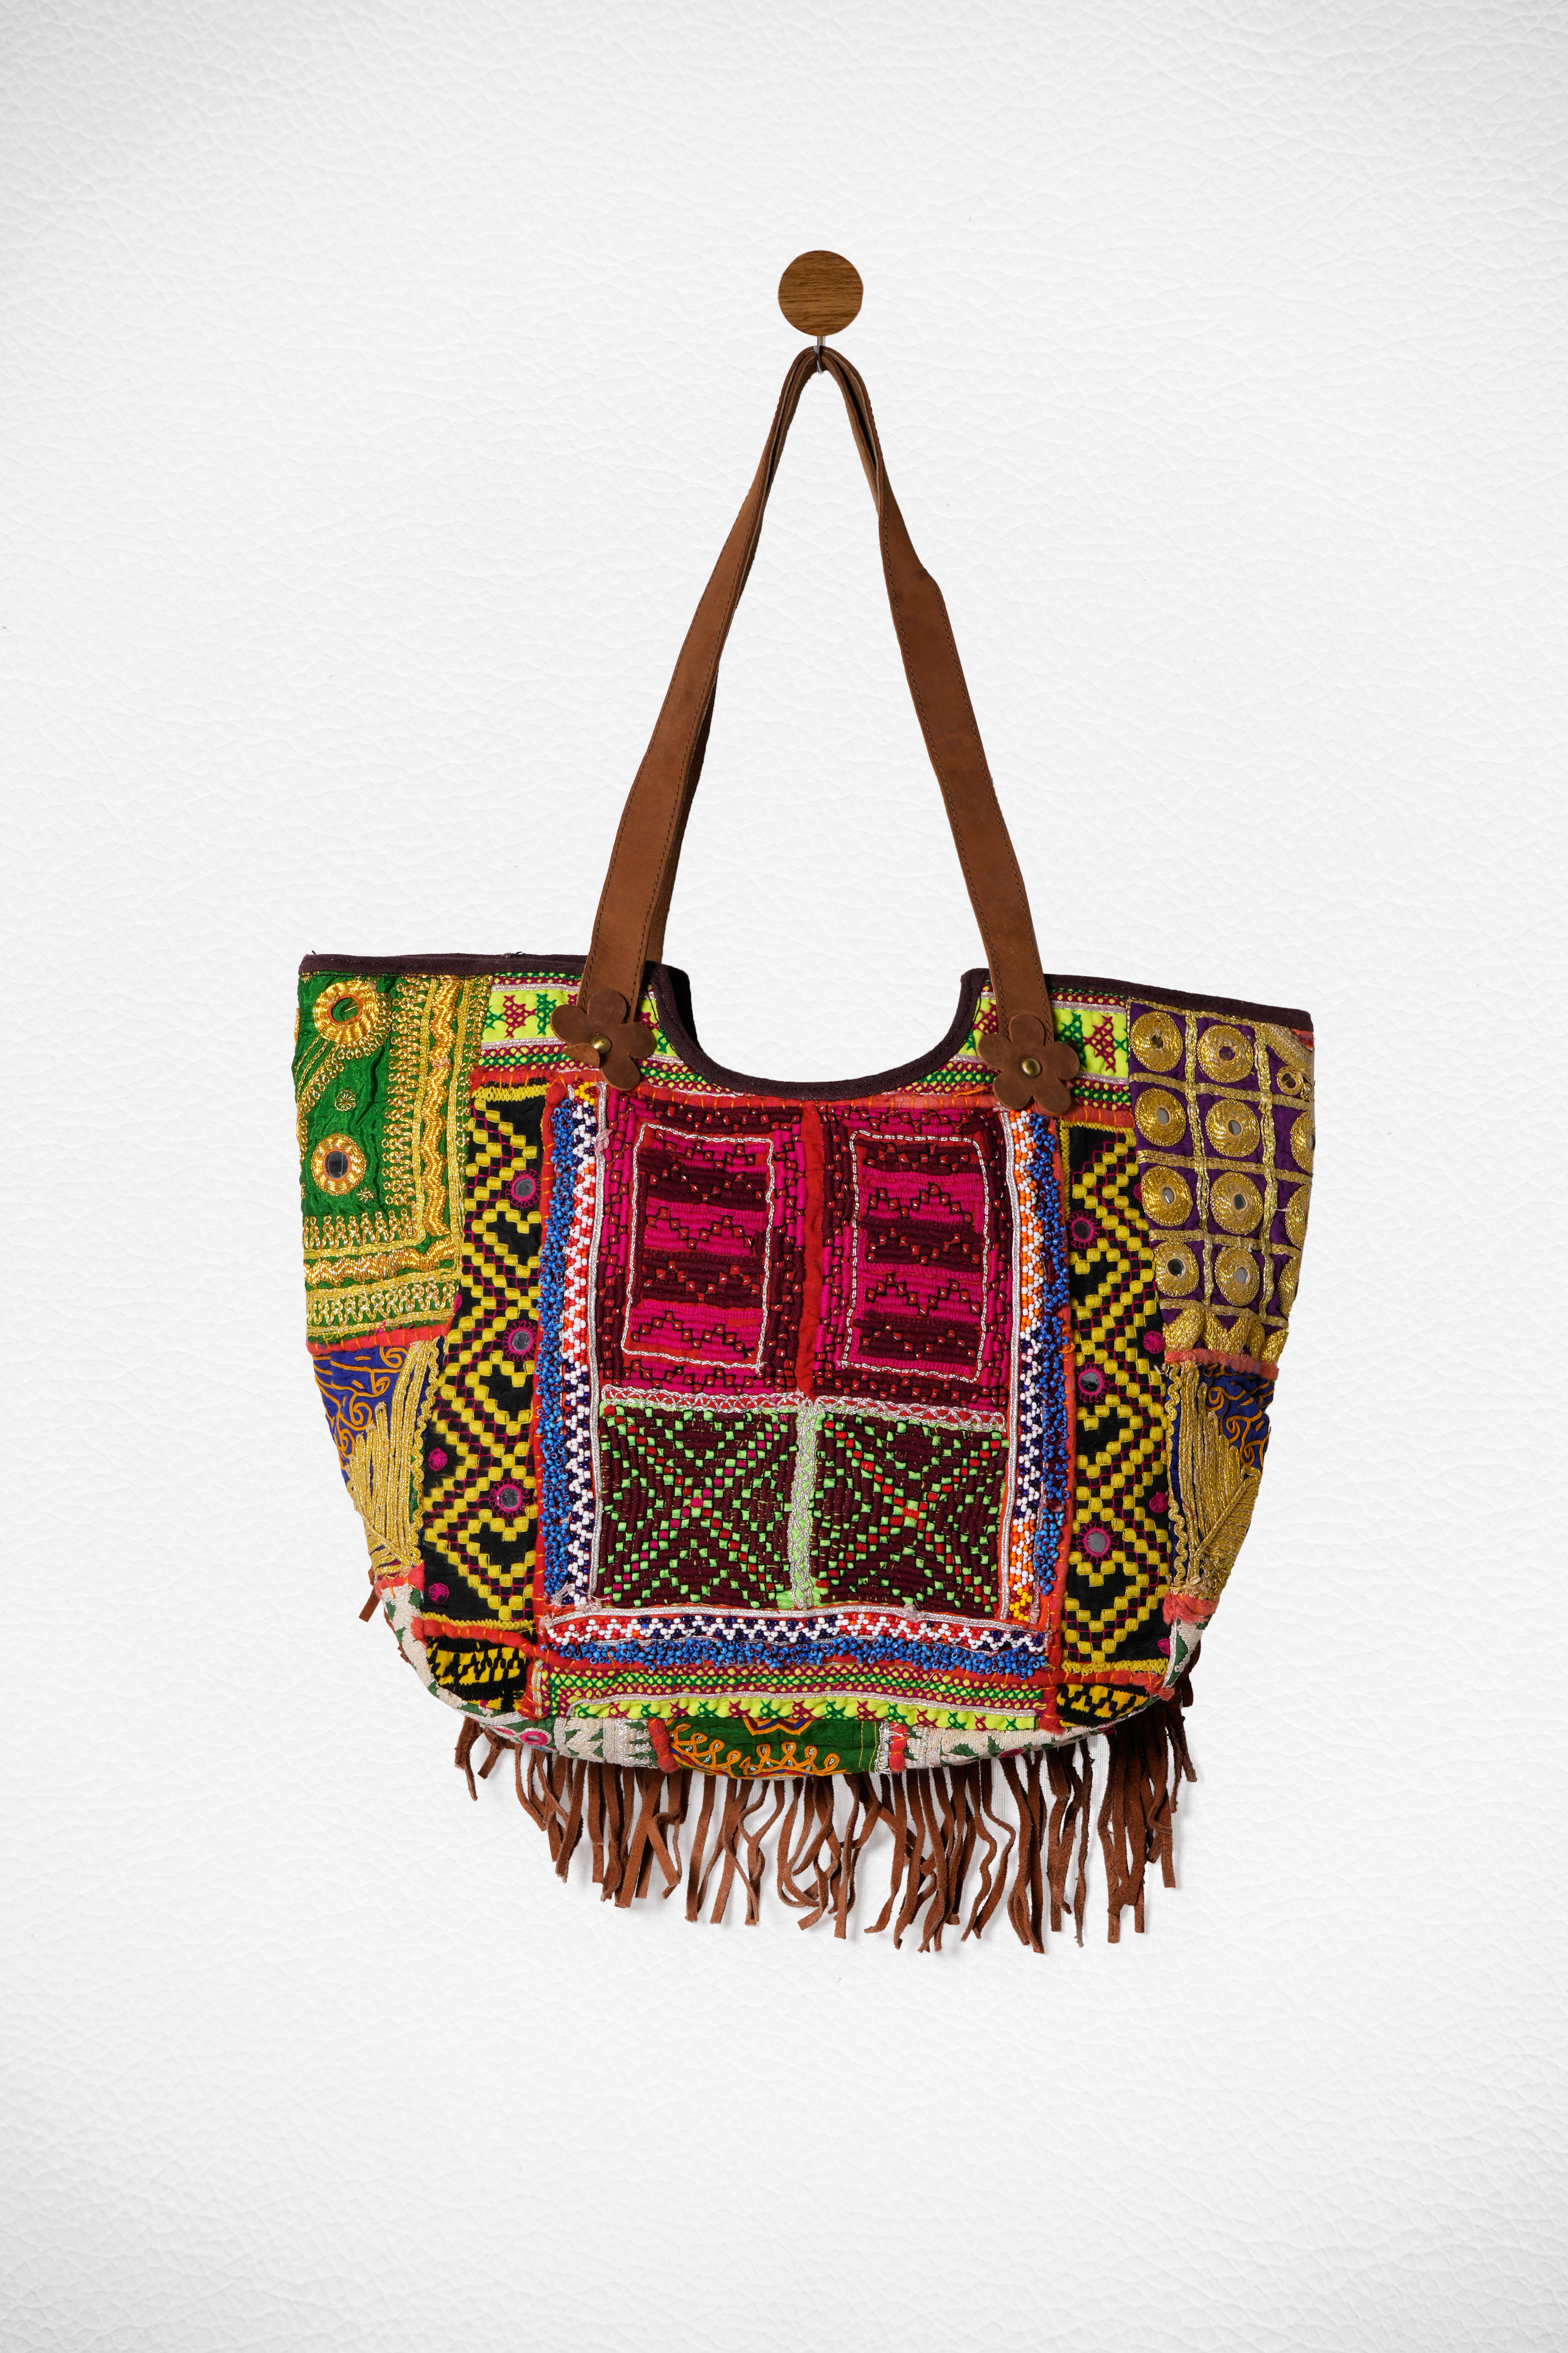 Mirror Work Rajasthani Embroidery Handbag | Bags, Embroidery bags,  Beautiful bags